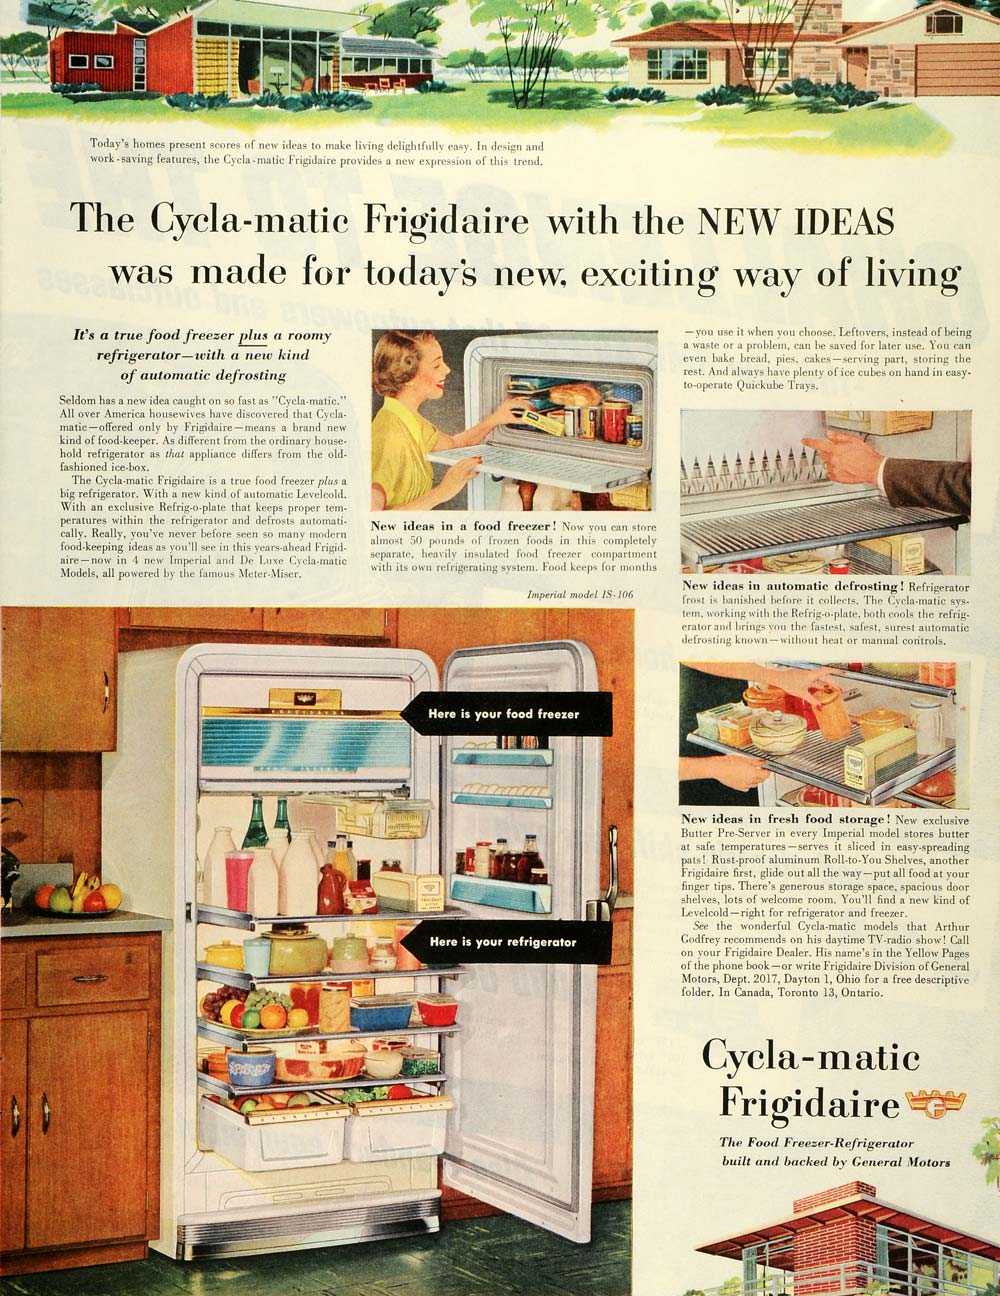 1953 Ad Cycla-matic Frigidaire Food Freezer Refrigerator Electric SEP6